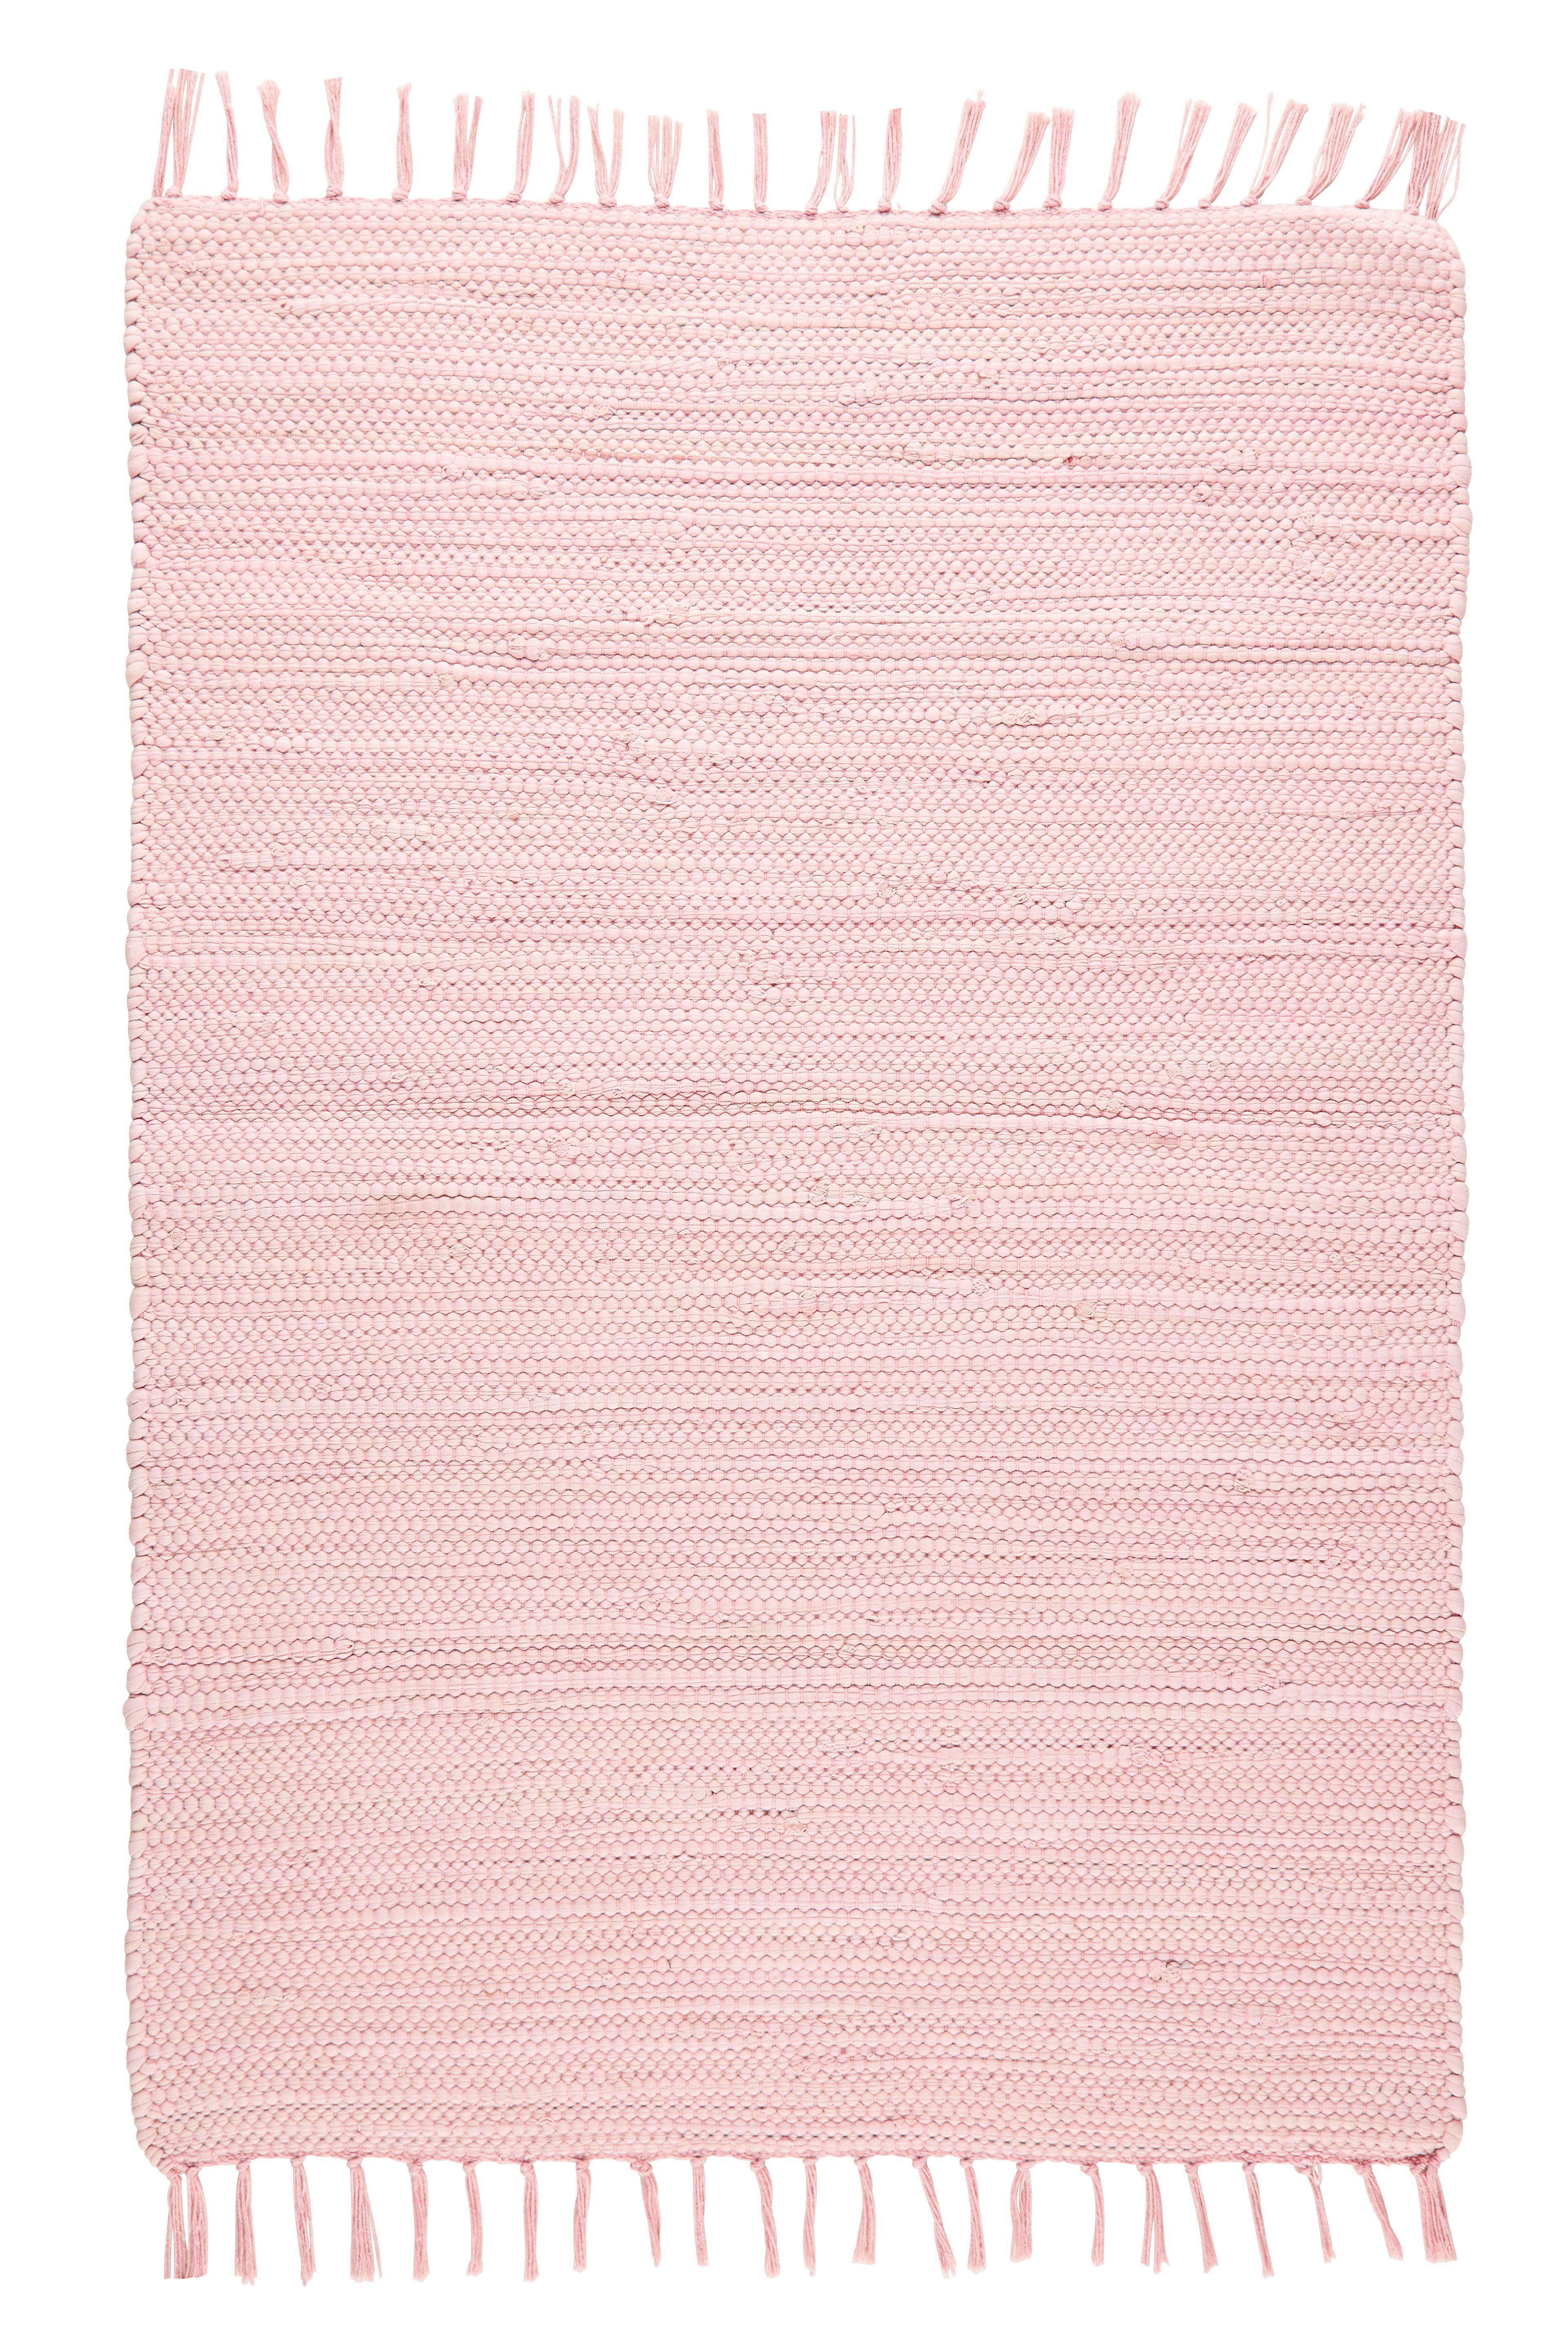 Hadrový Koberec Julia 2, 70/130cm, Růžová - růžová, Romantický / Rustikální, textil (70/130cm) - Modern Living